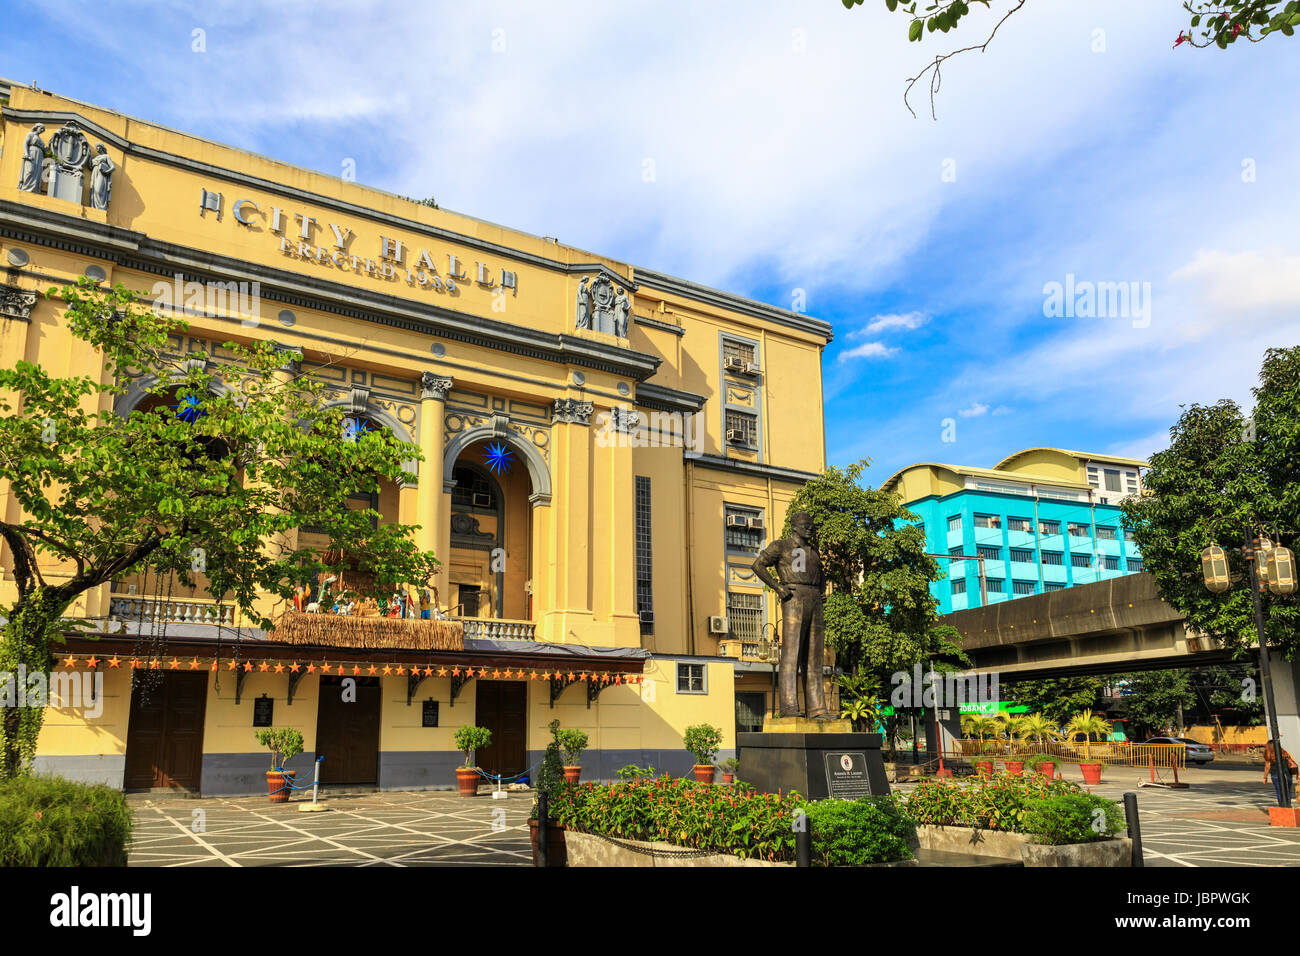 27. November 2016 Manila Rathaus in Manila, Philippinen - Stadtbild Stockfoto